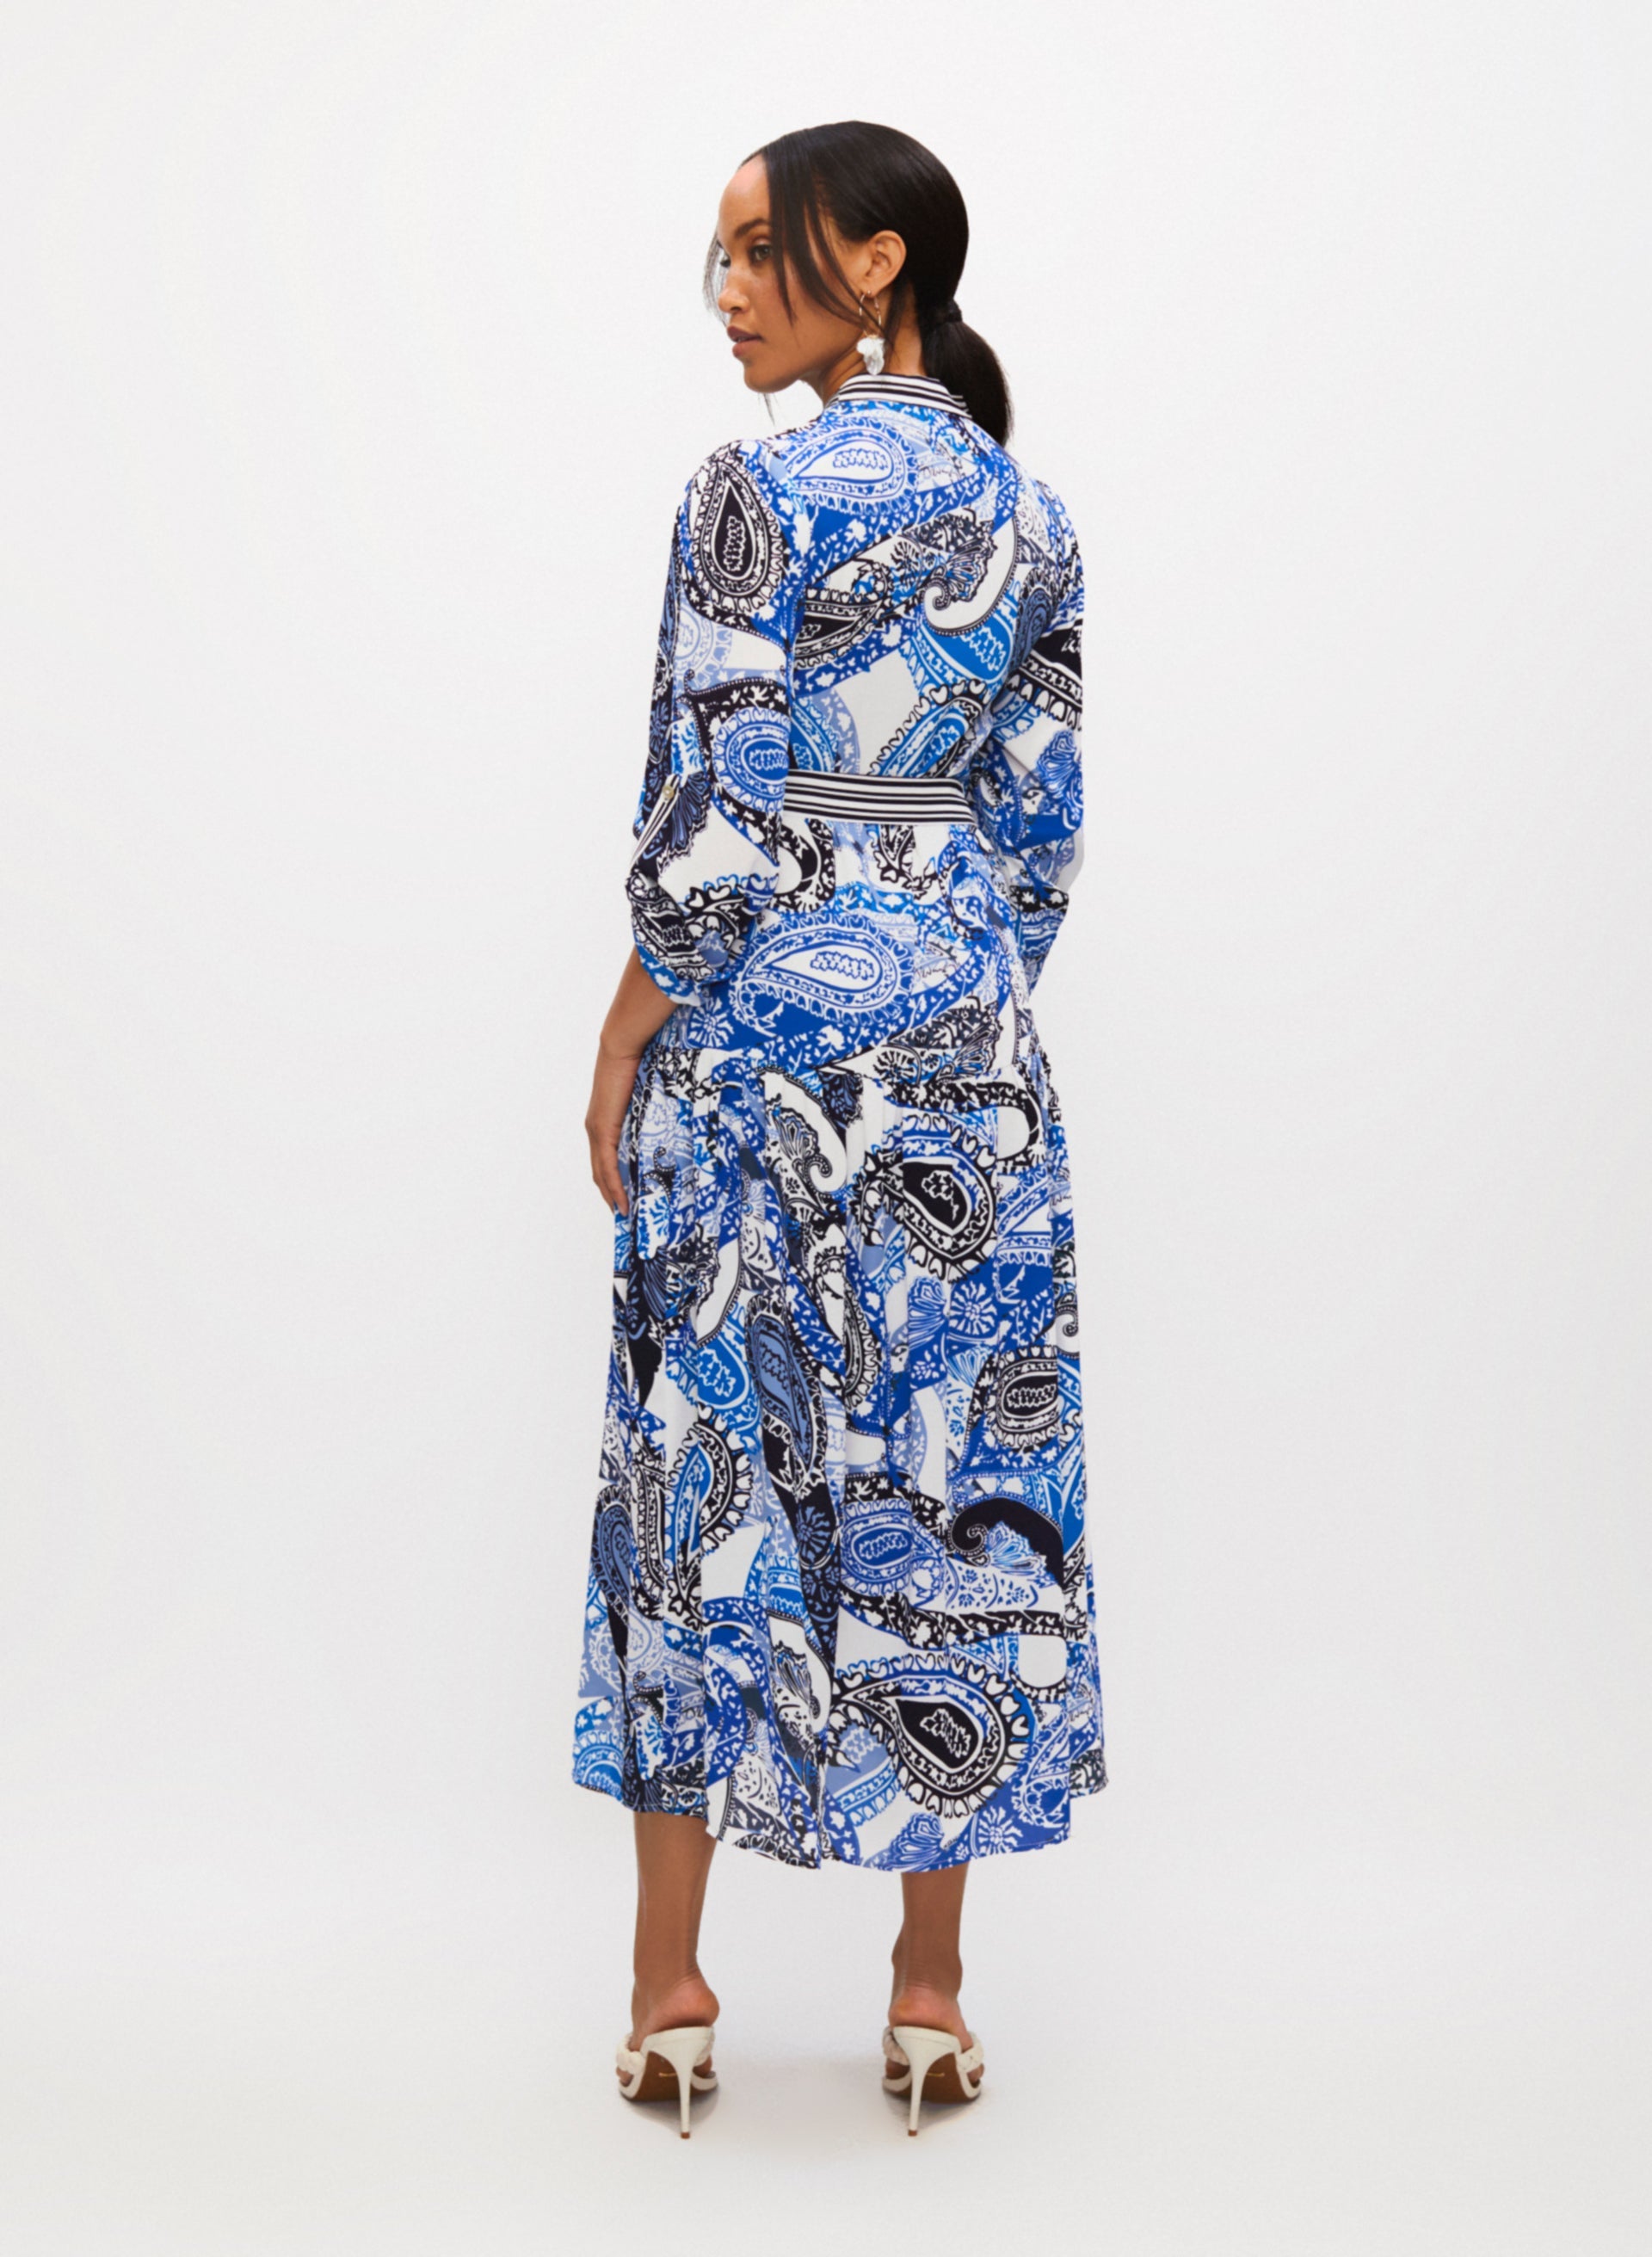 Joseph Ribkoff - Paisley Print Dress